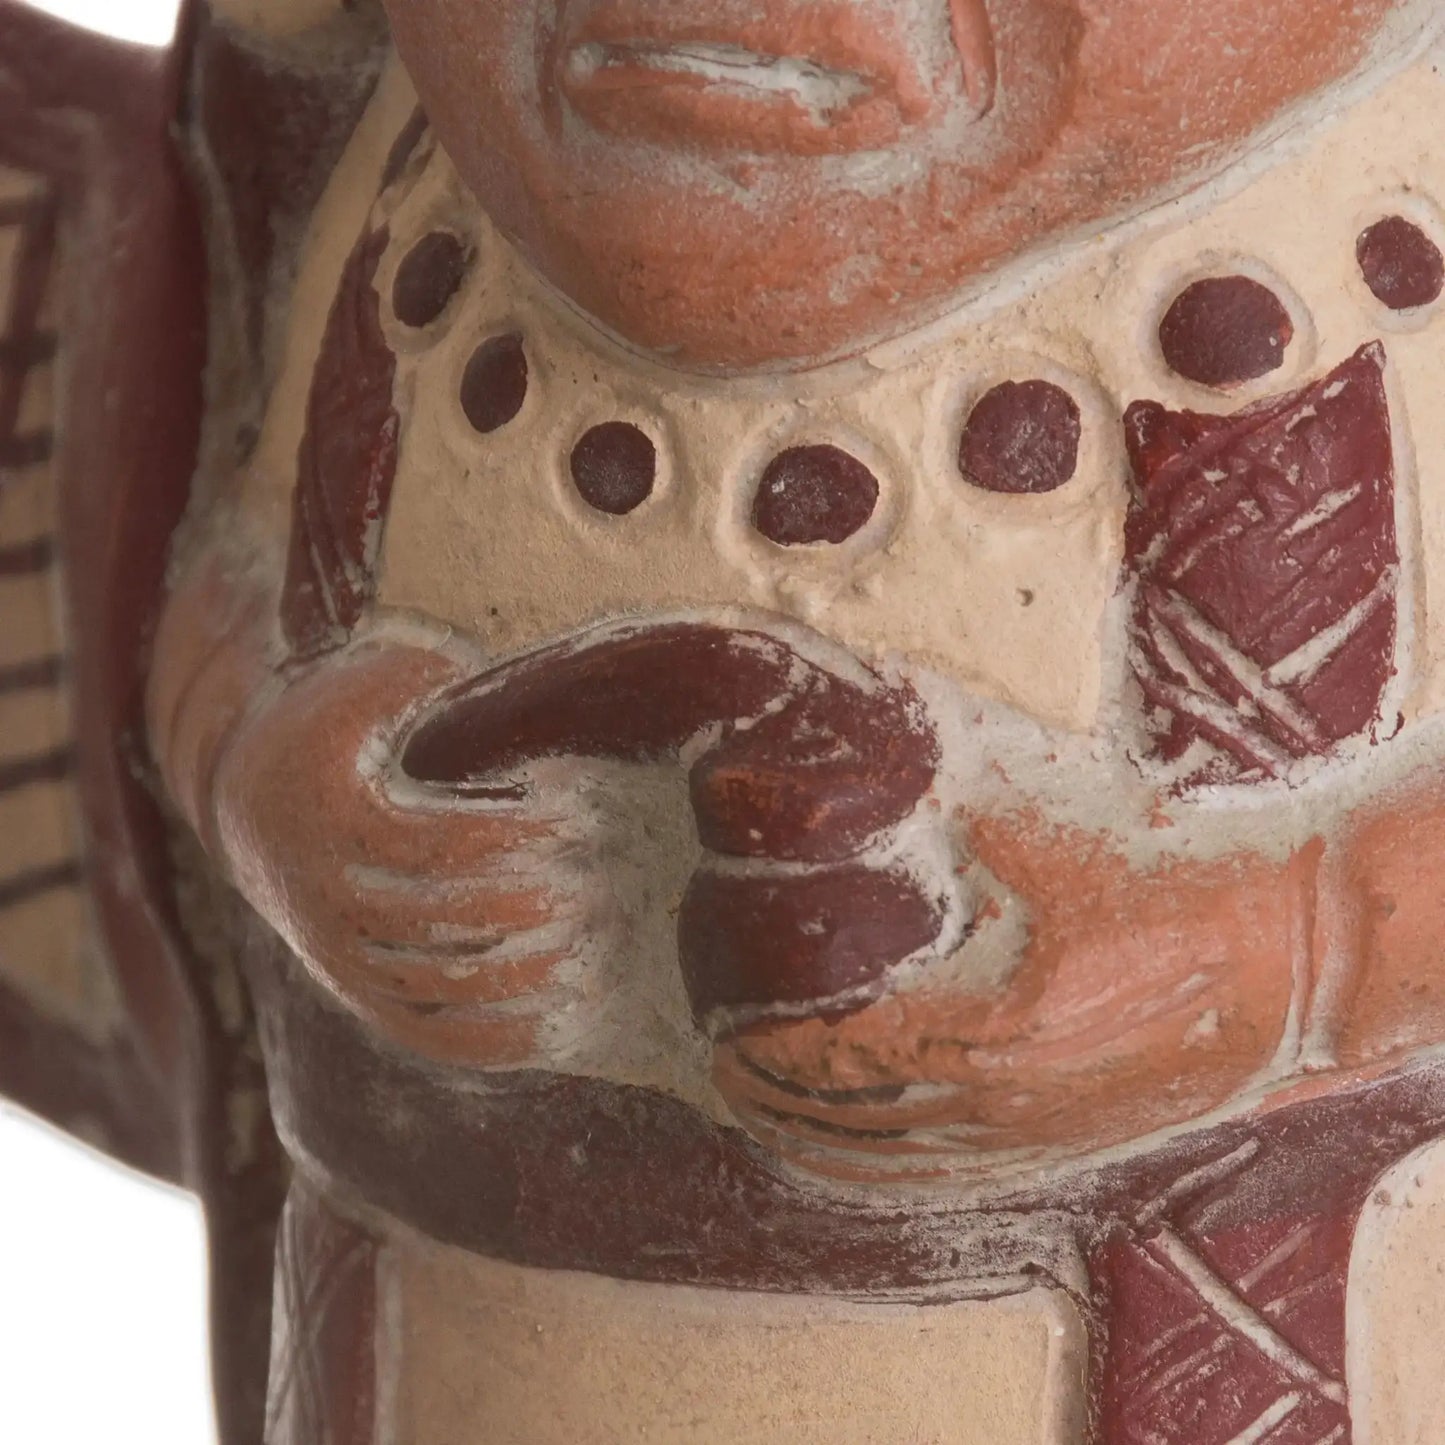 Mochica Shaman - Ceramic Decorative Vase from Peru - Art